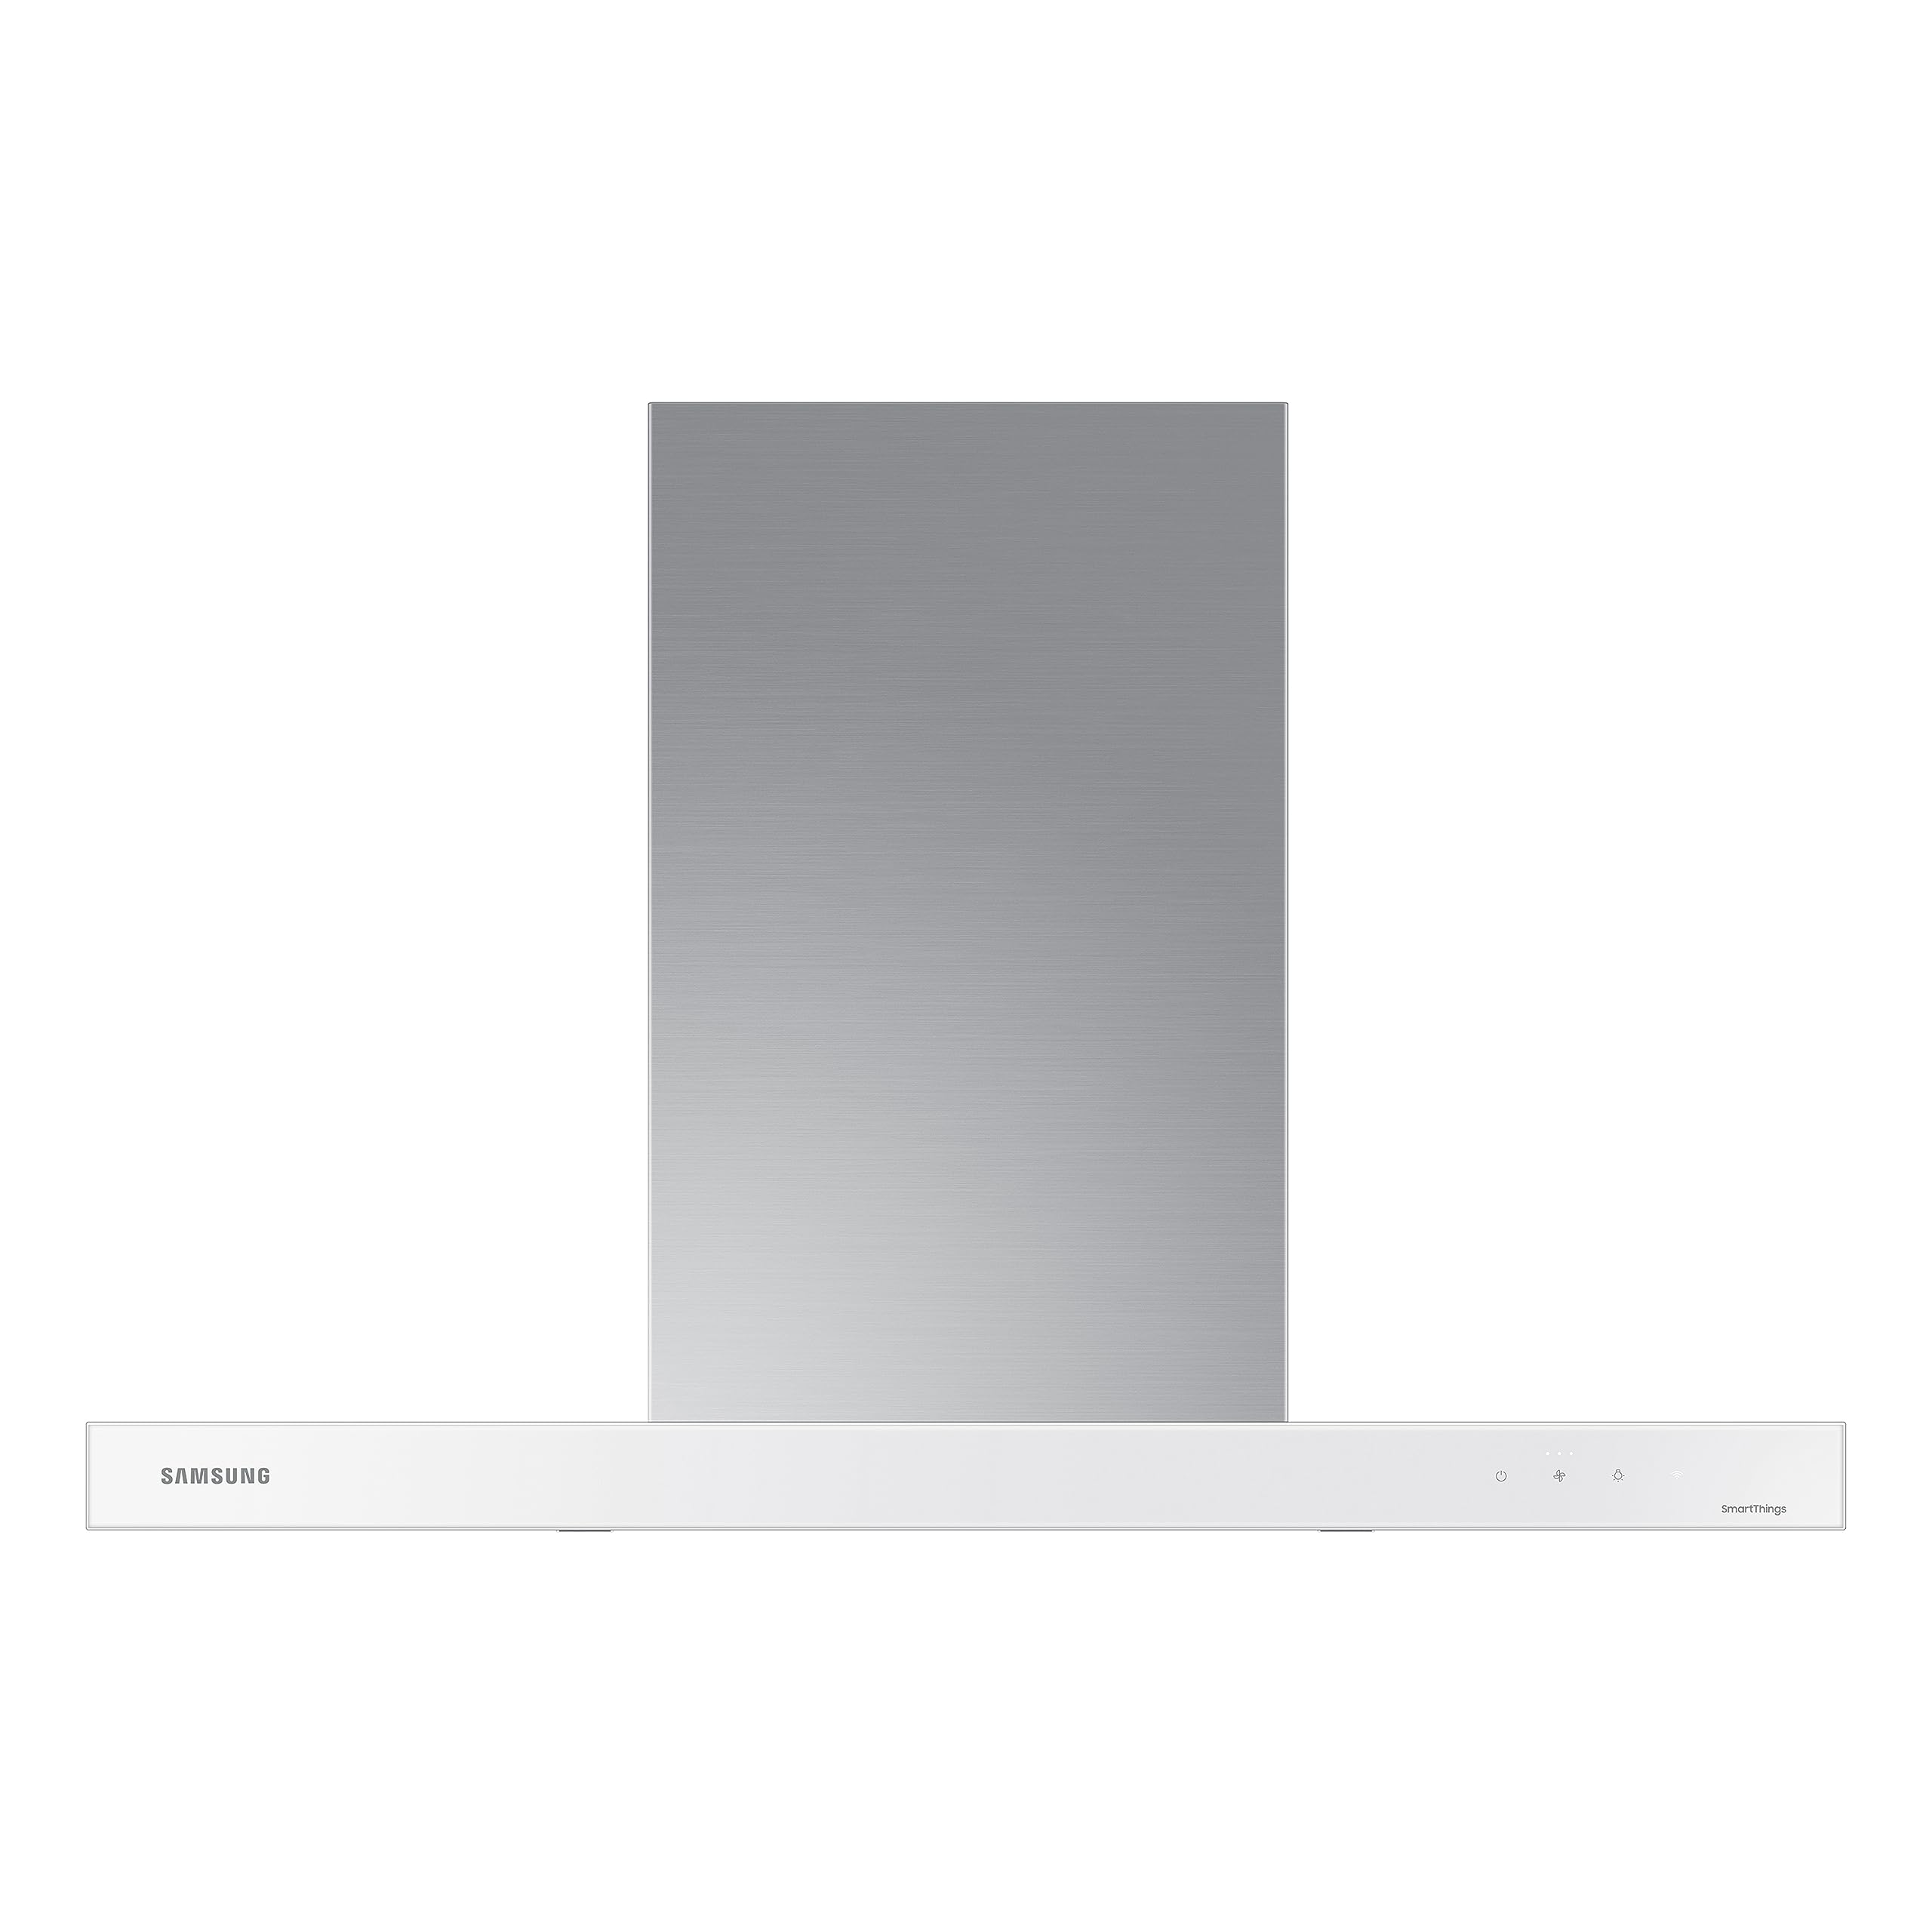 Samsung 36" Bespoke Wall Mount Range Hood in Clean White $476.96 at Amazon